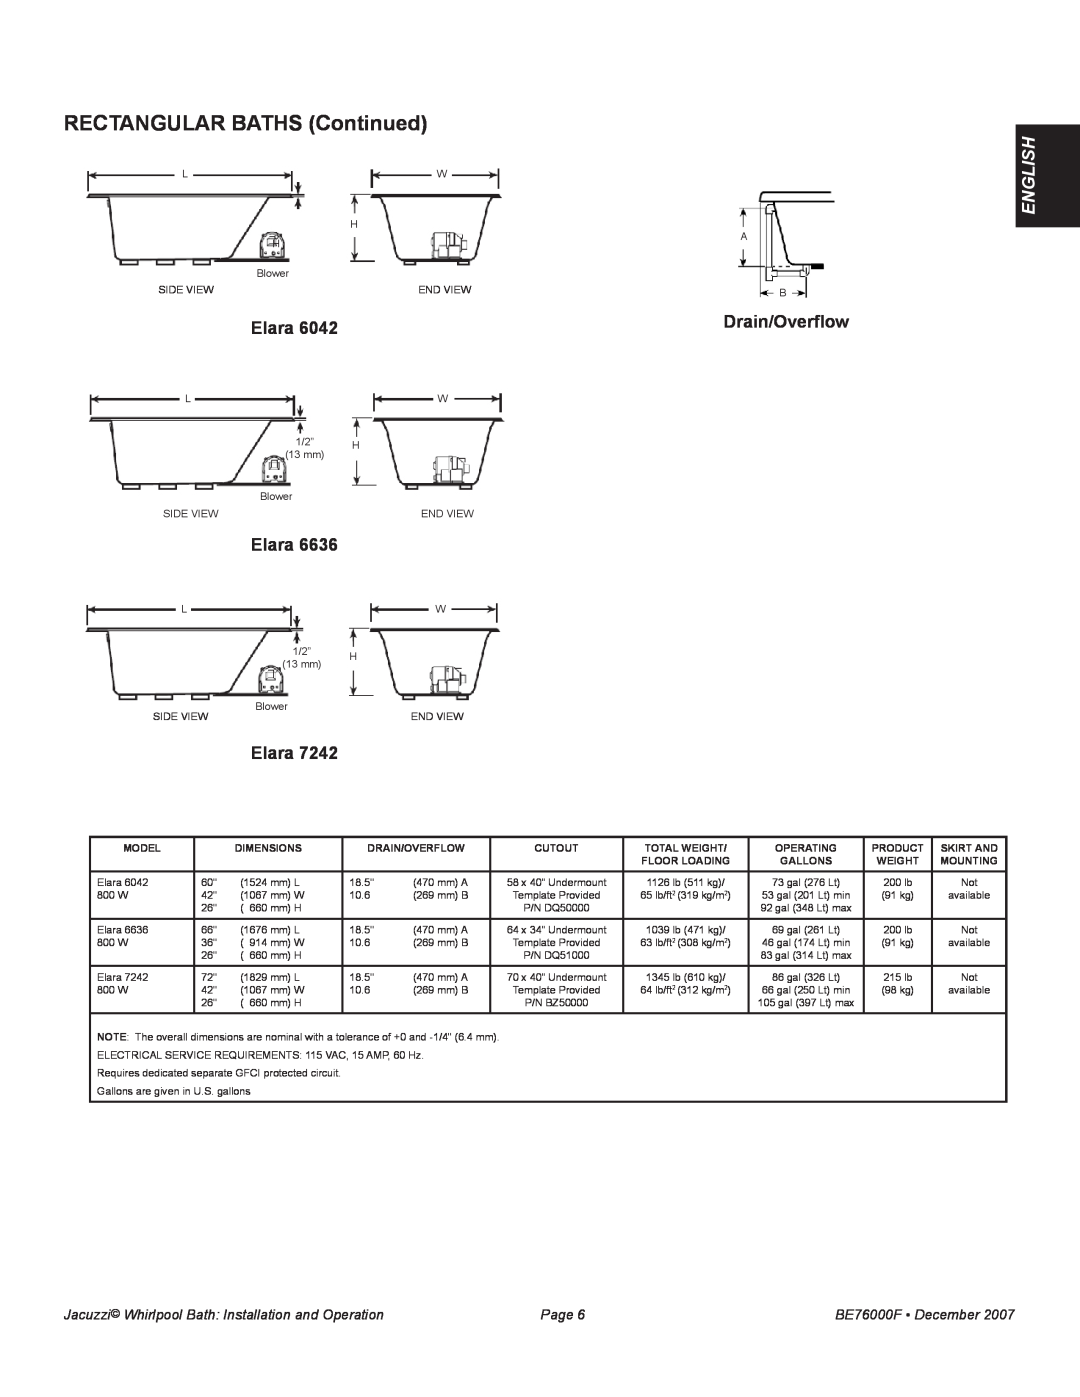 Jacuzzi LUXURY SERIES manual Rectangular Baths Continued, Elara, English, Drain/Overflow, Page, BE76000F December 